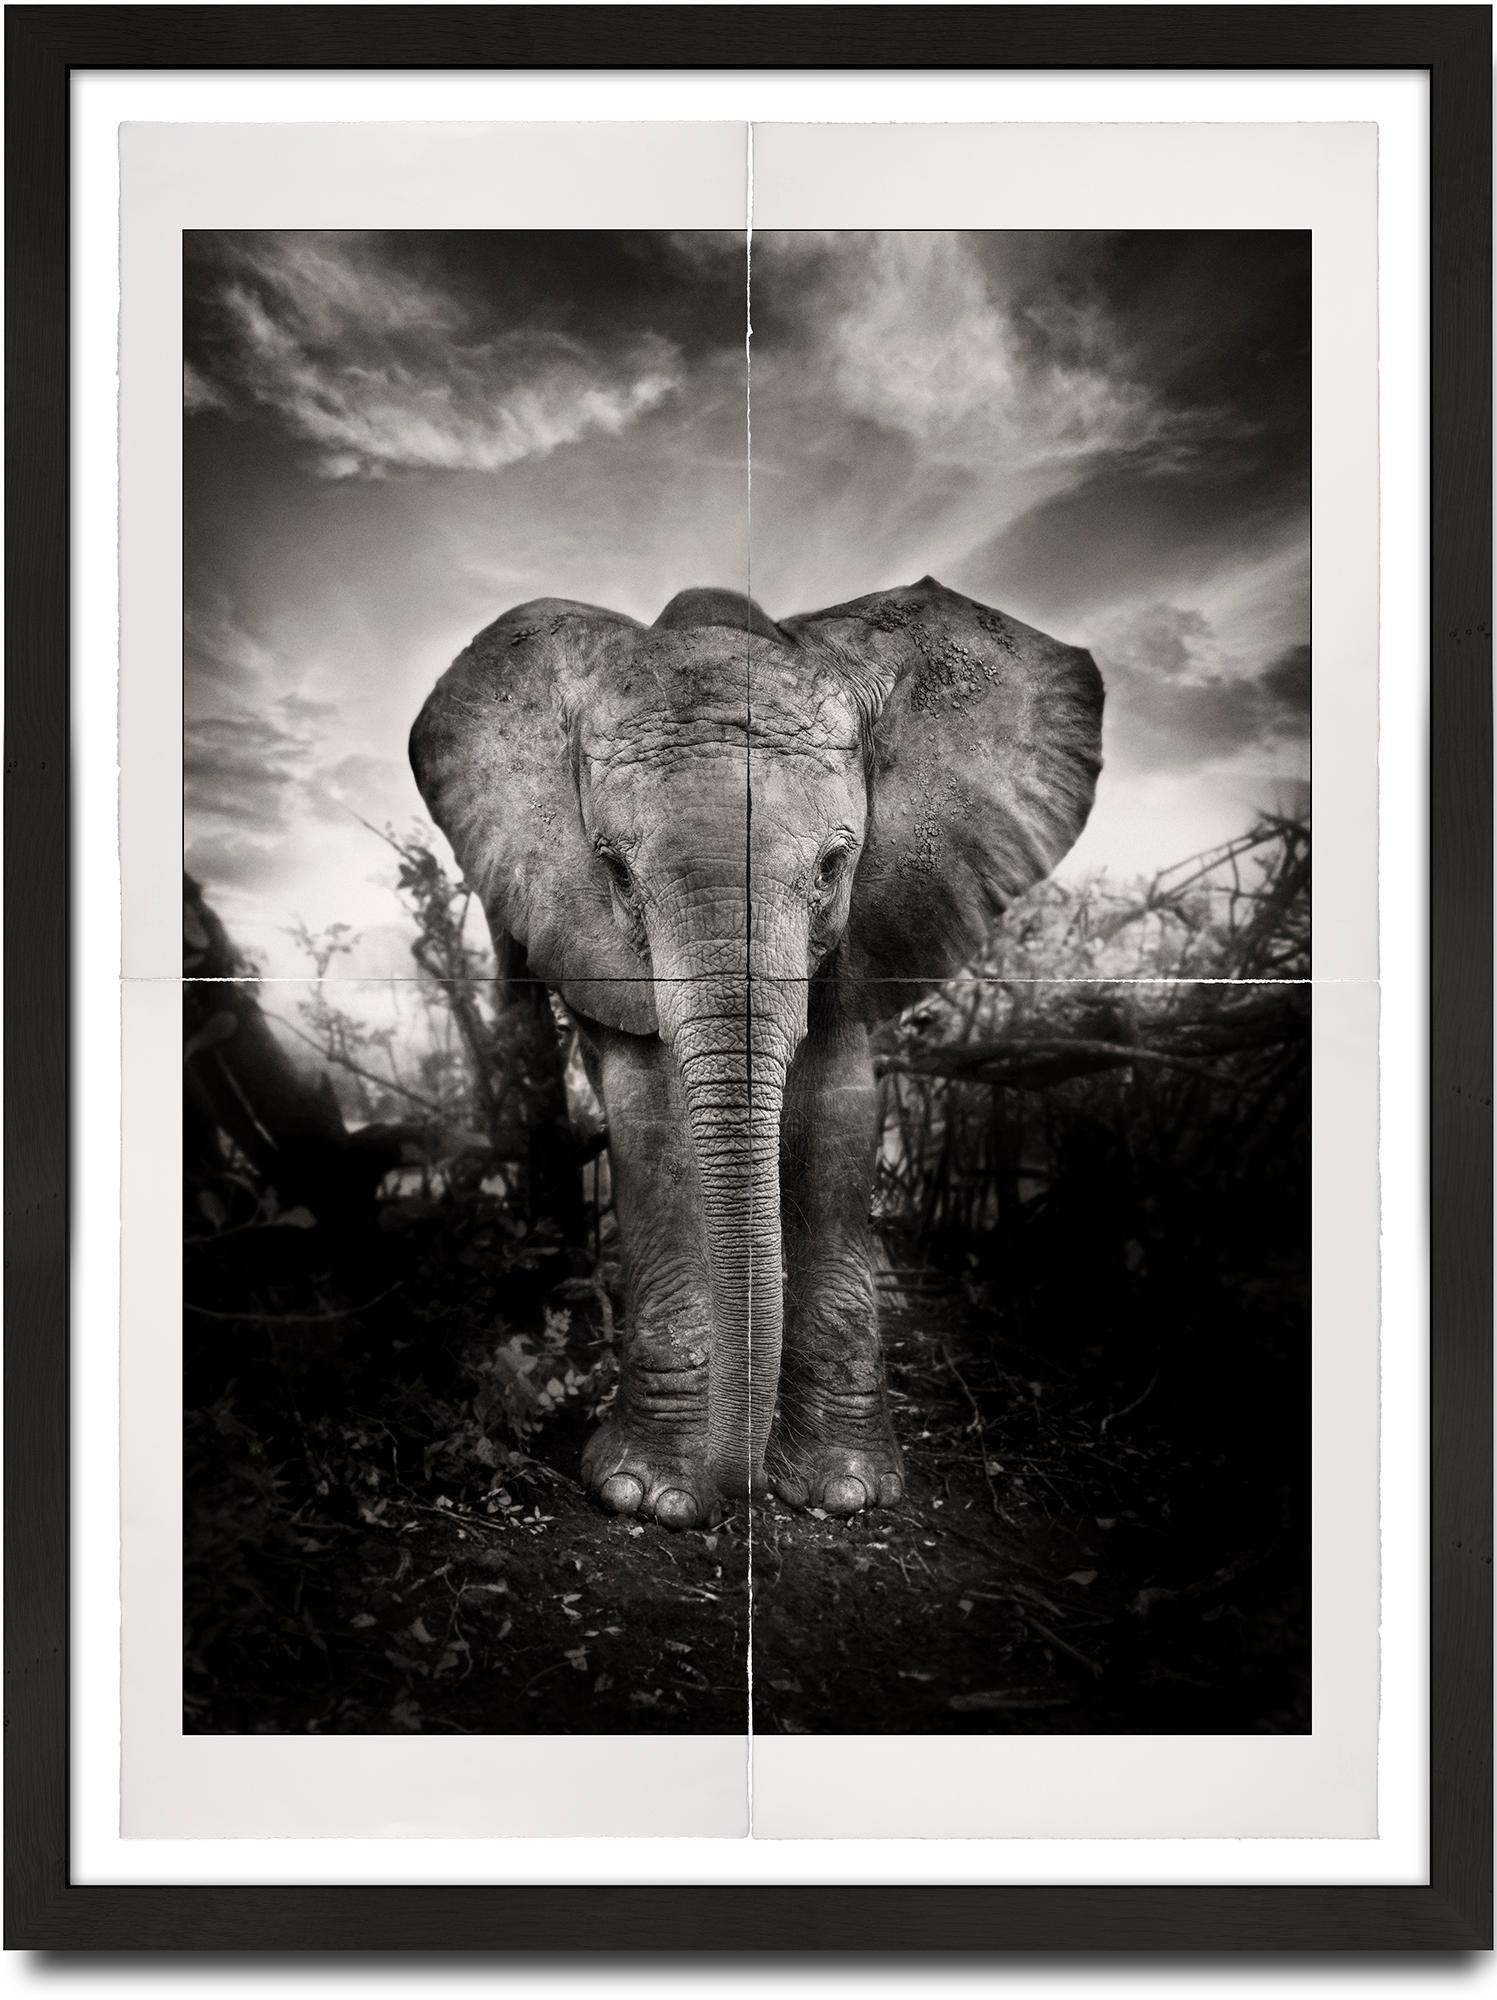 Joachim Schmeisser Portrait Photograph - Kibo, Platinum, animal, wildlife, black and white photography, elephant